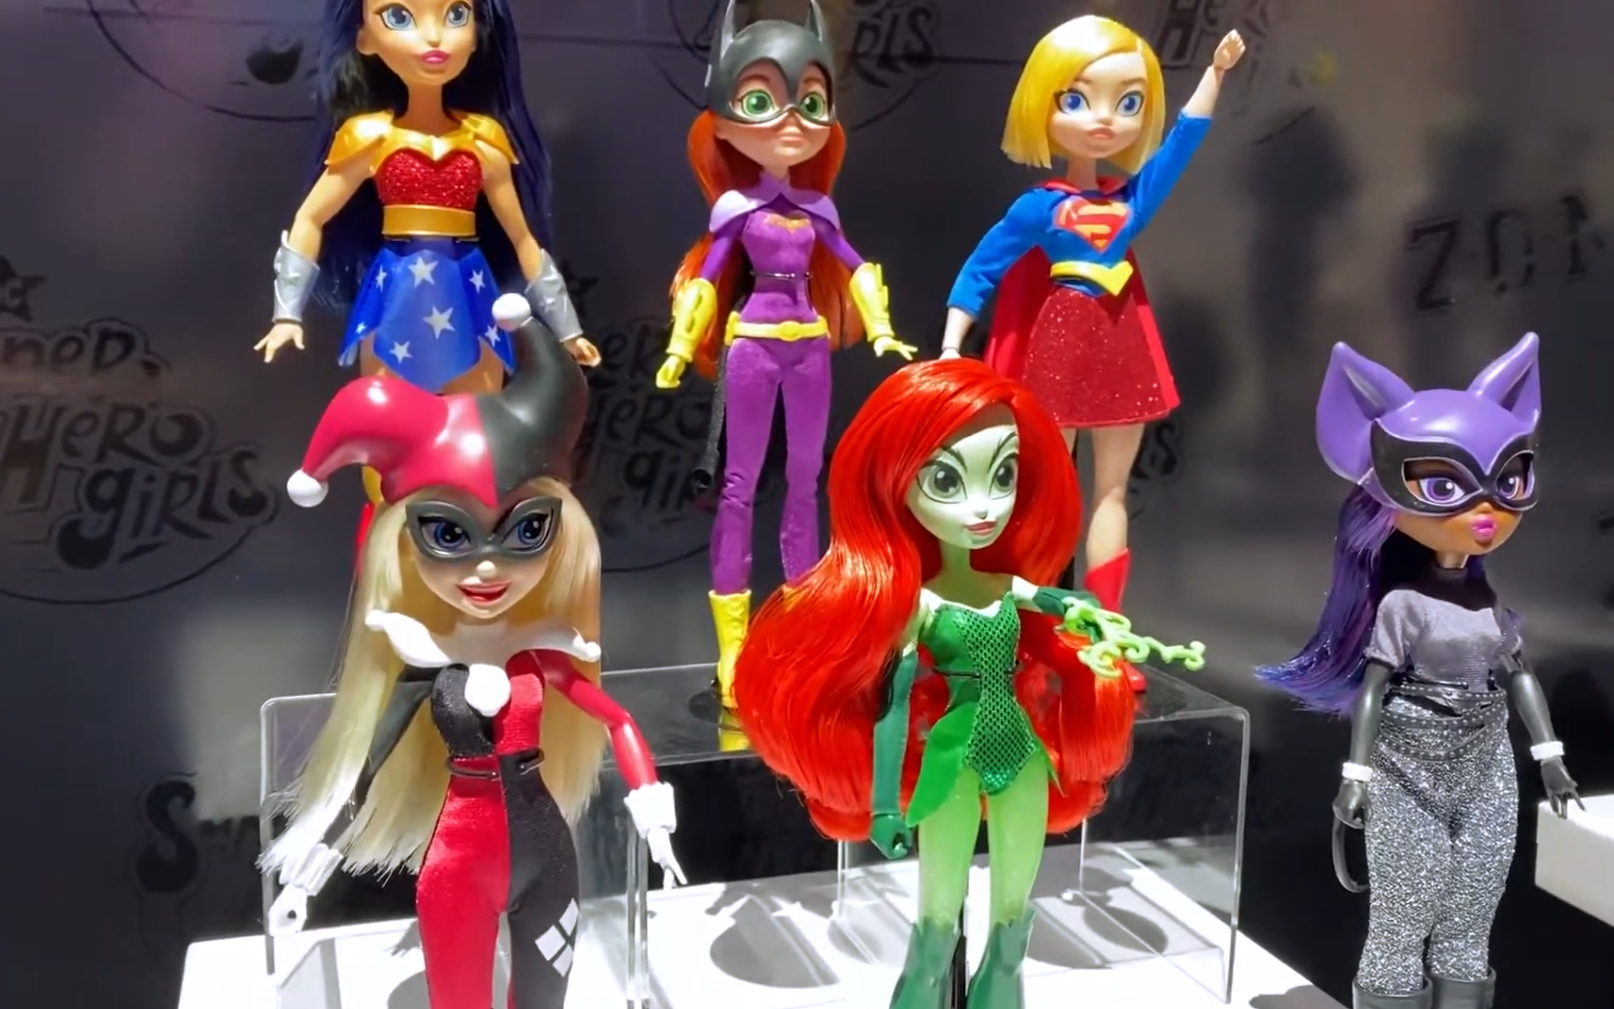 new dc superhero girl dolls